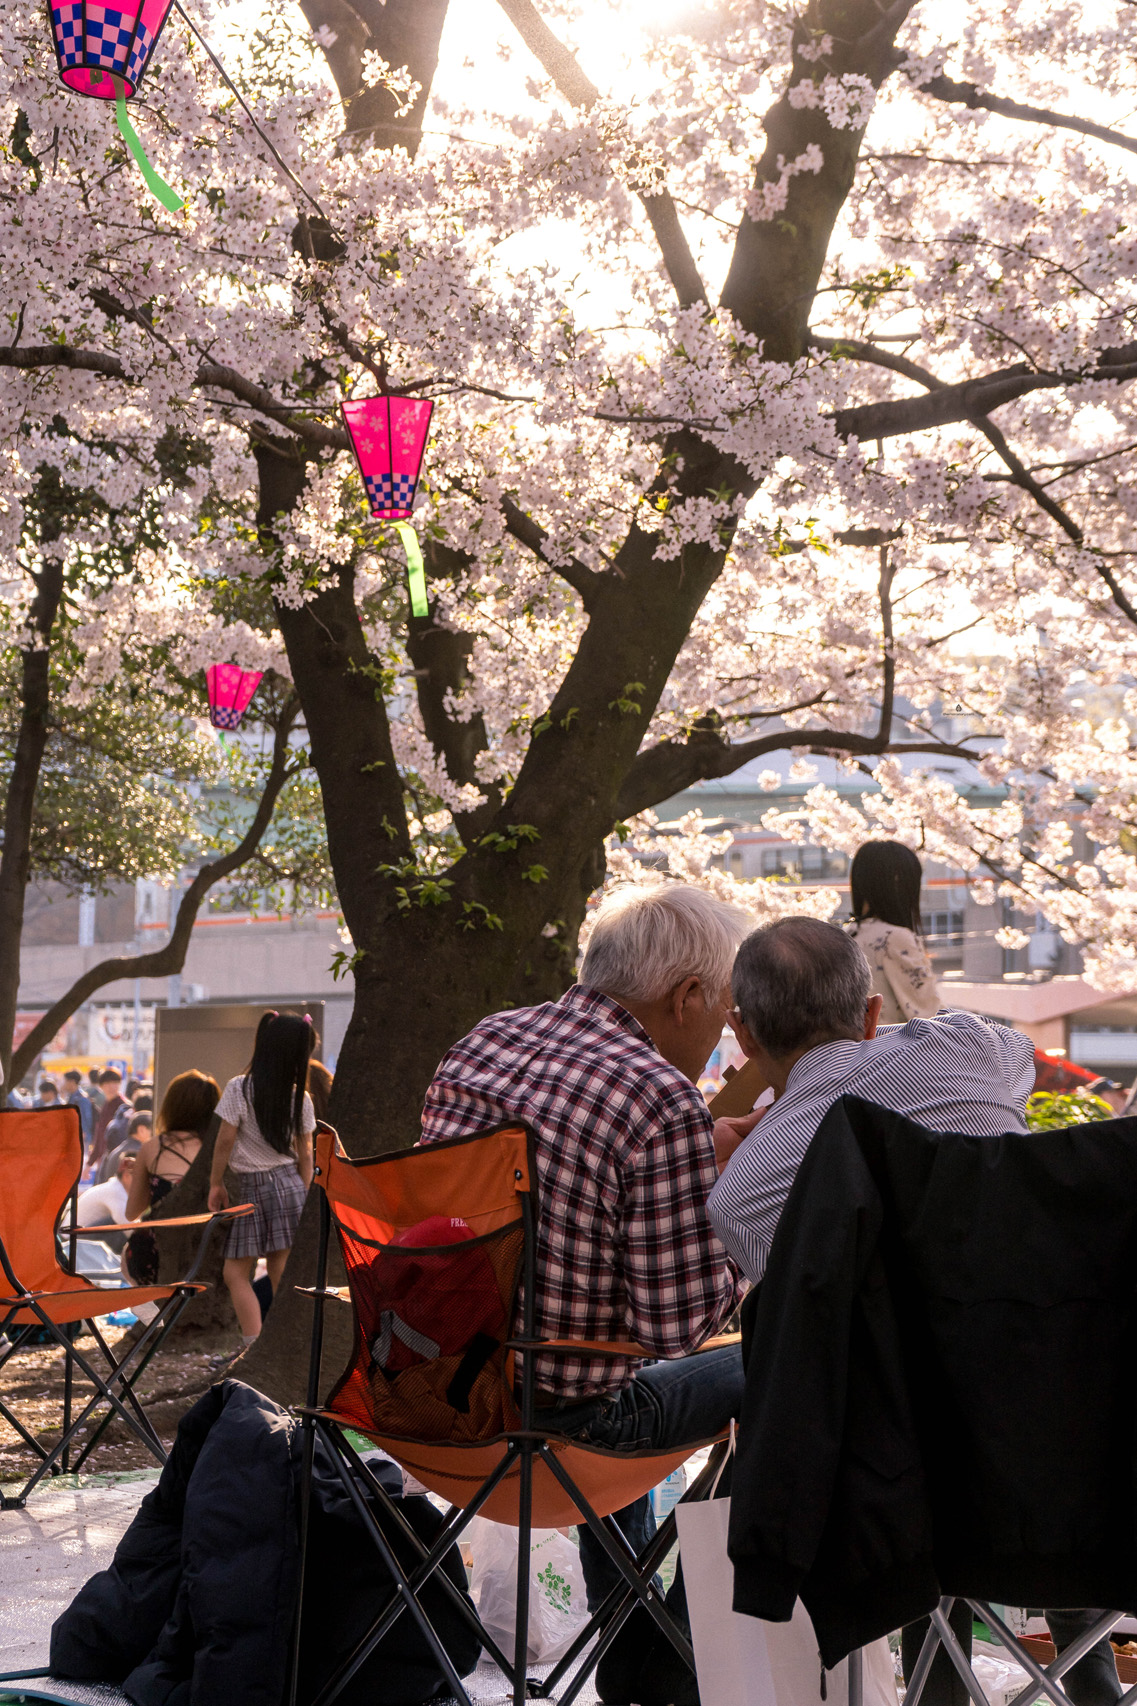 Enjoying the cherry blossoms in Tsurumai park, Nagoya